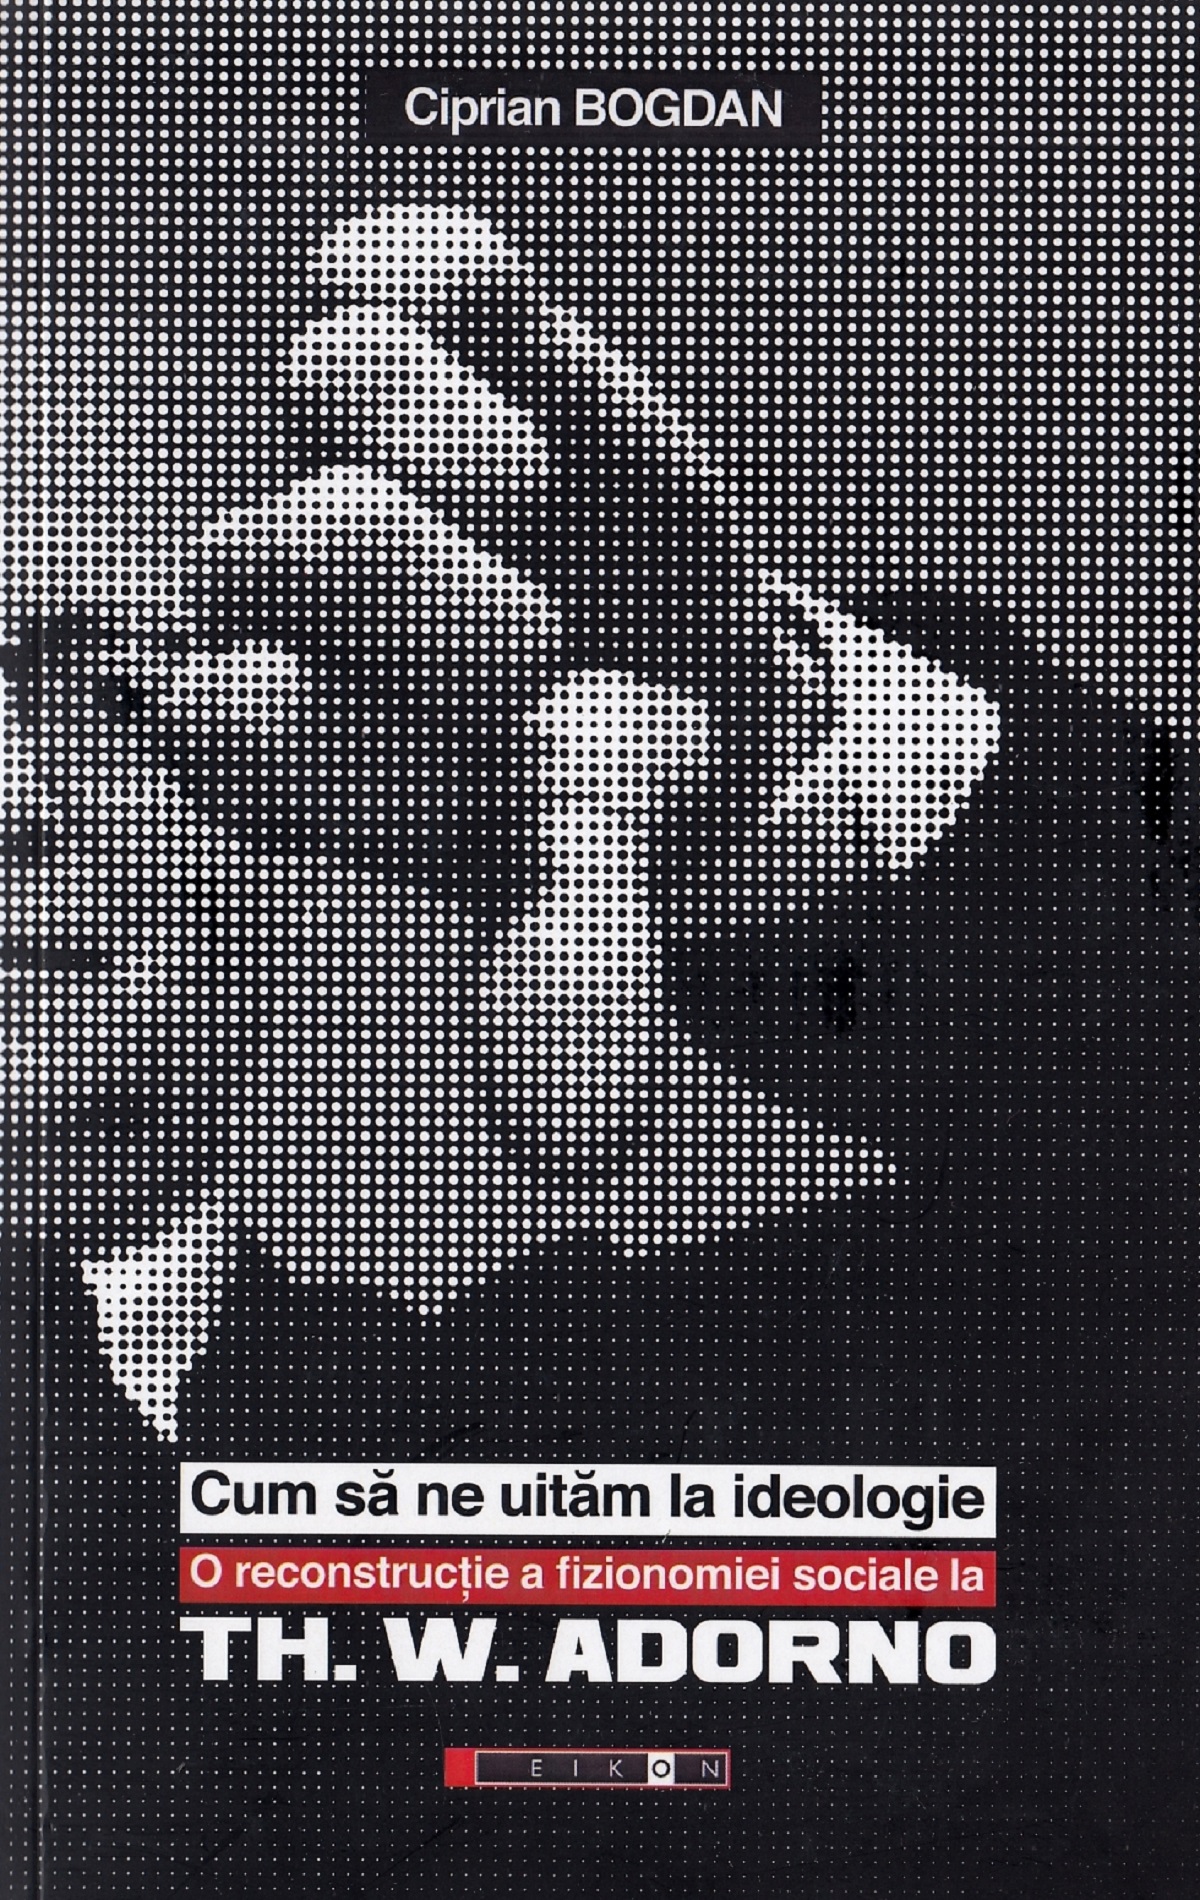 Cum sa ne uitam la ideologie. Th. W. Adorno - Ciprian Bogdan